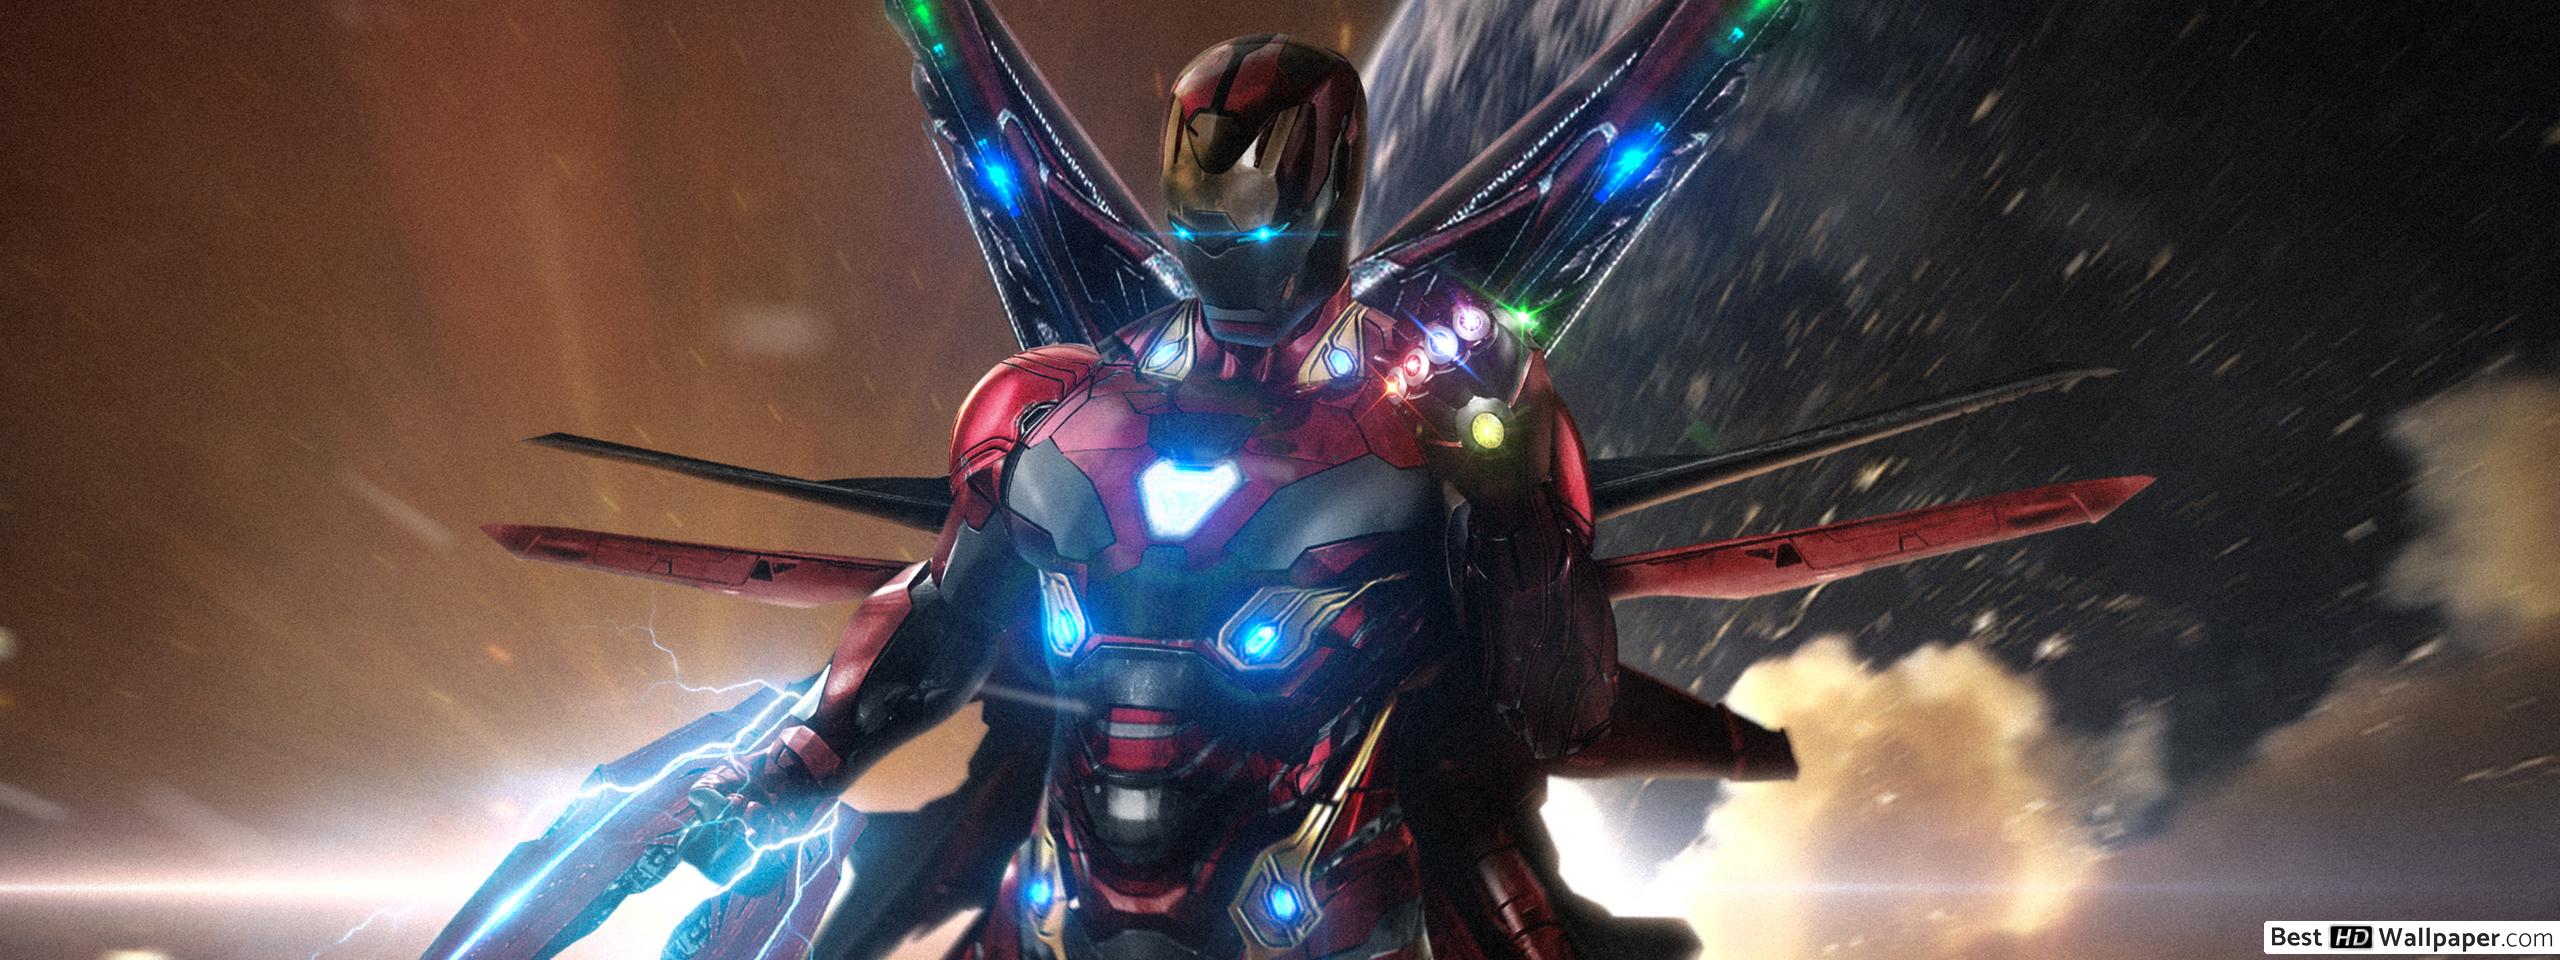 Avengers: Endgame Ironman with infinity gauntlet HD wallpaper download